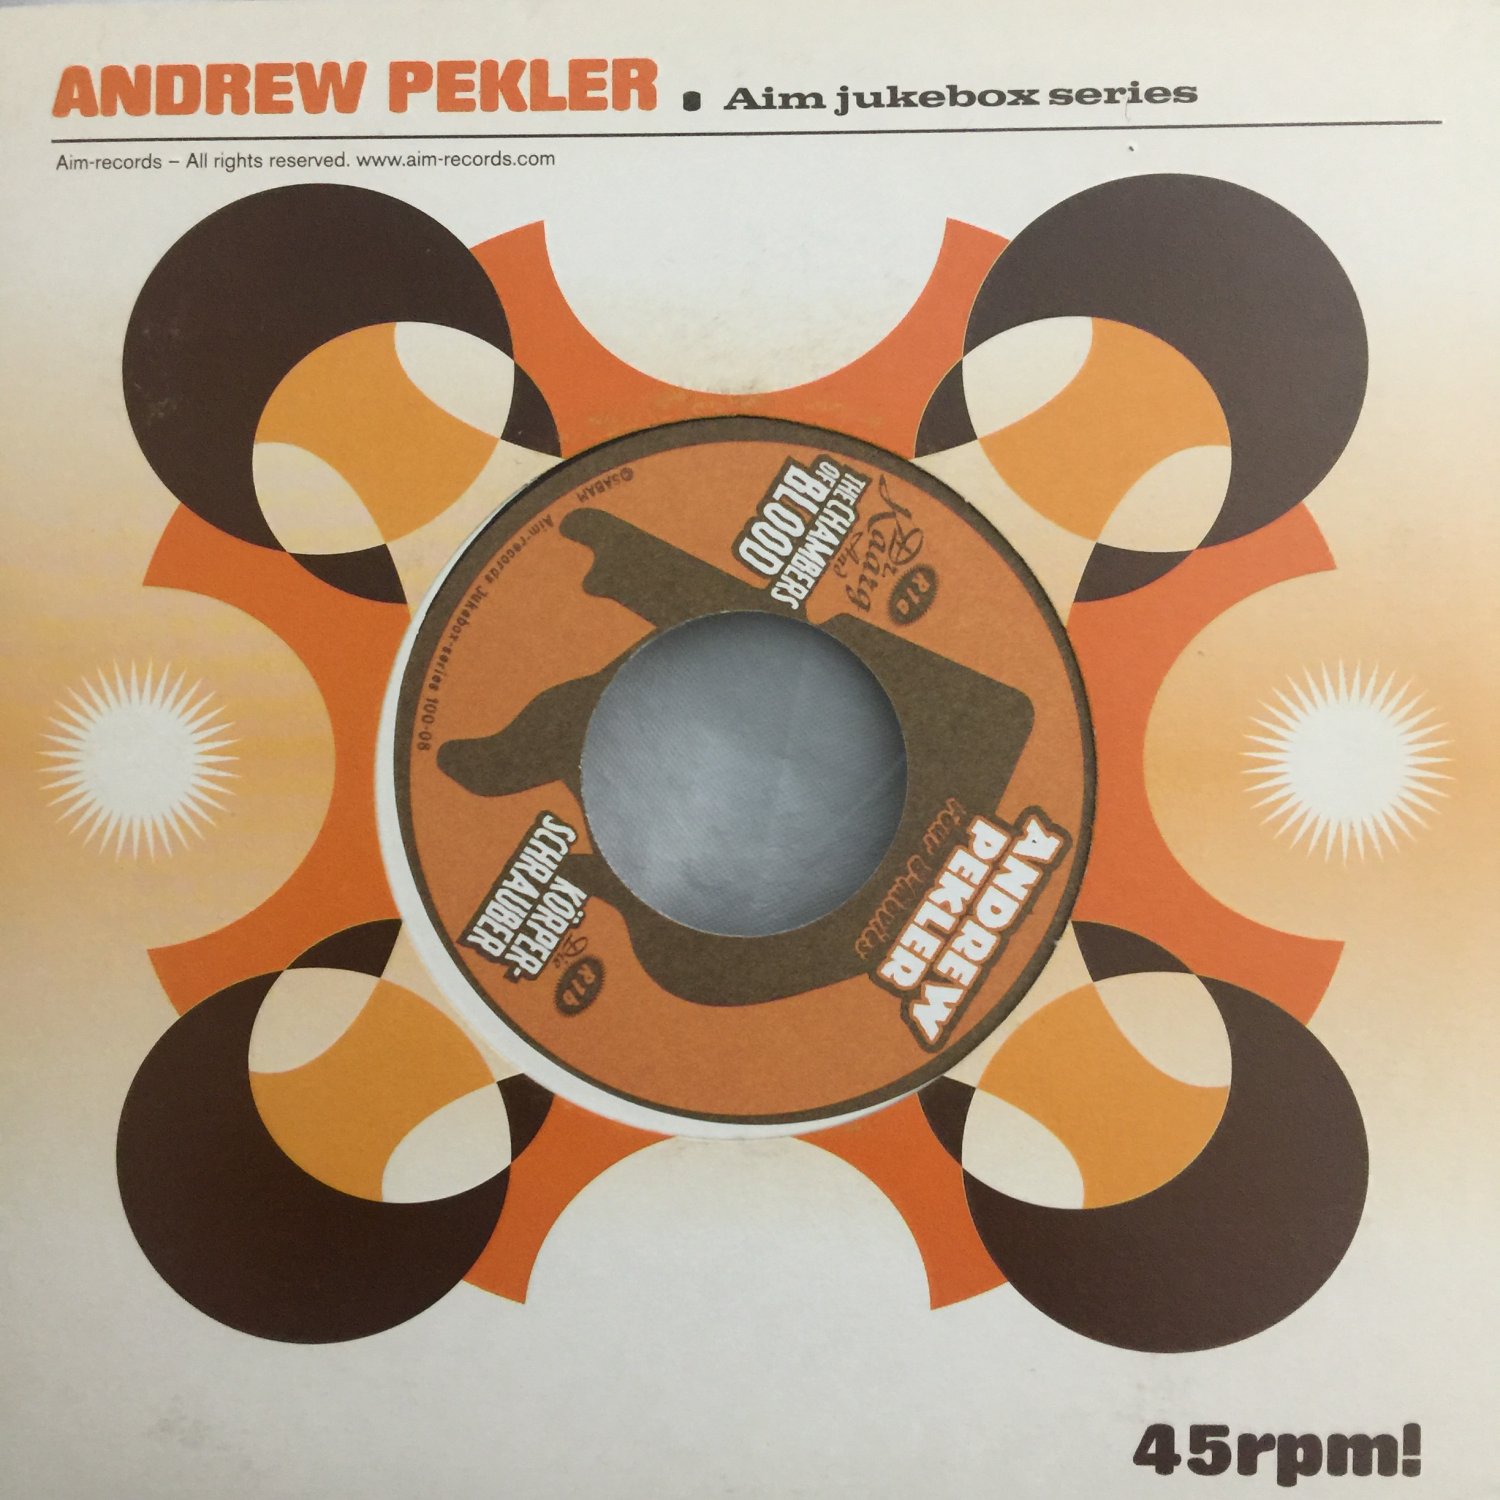 AIM10008 - Andrew Pekler - Jukebox Series #8 (7") AIM-RECORDS